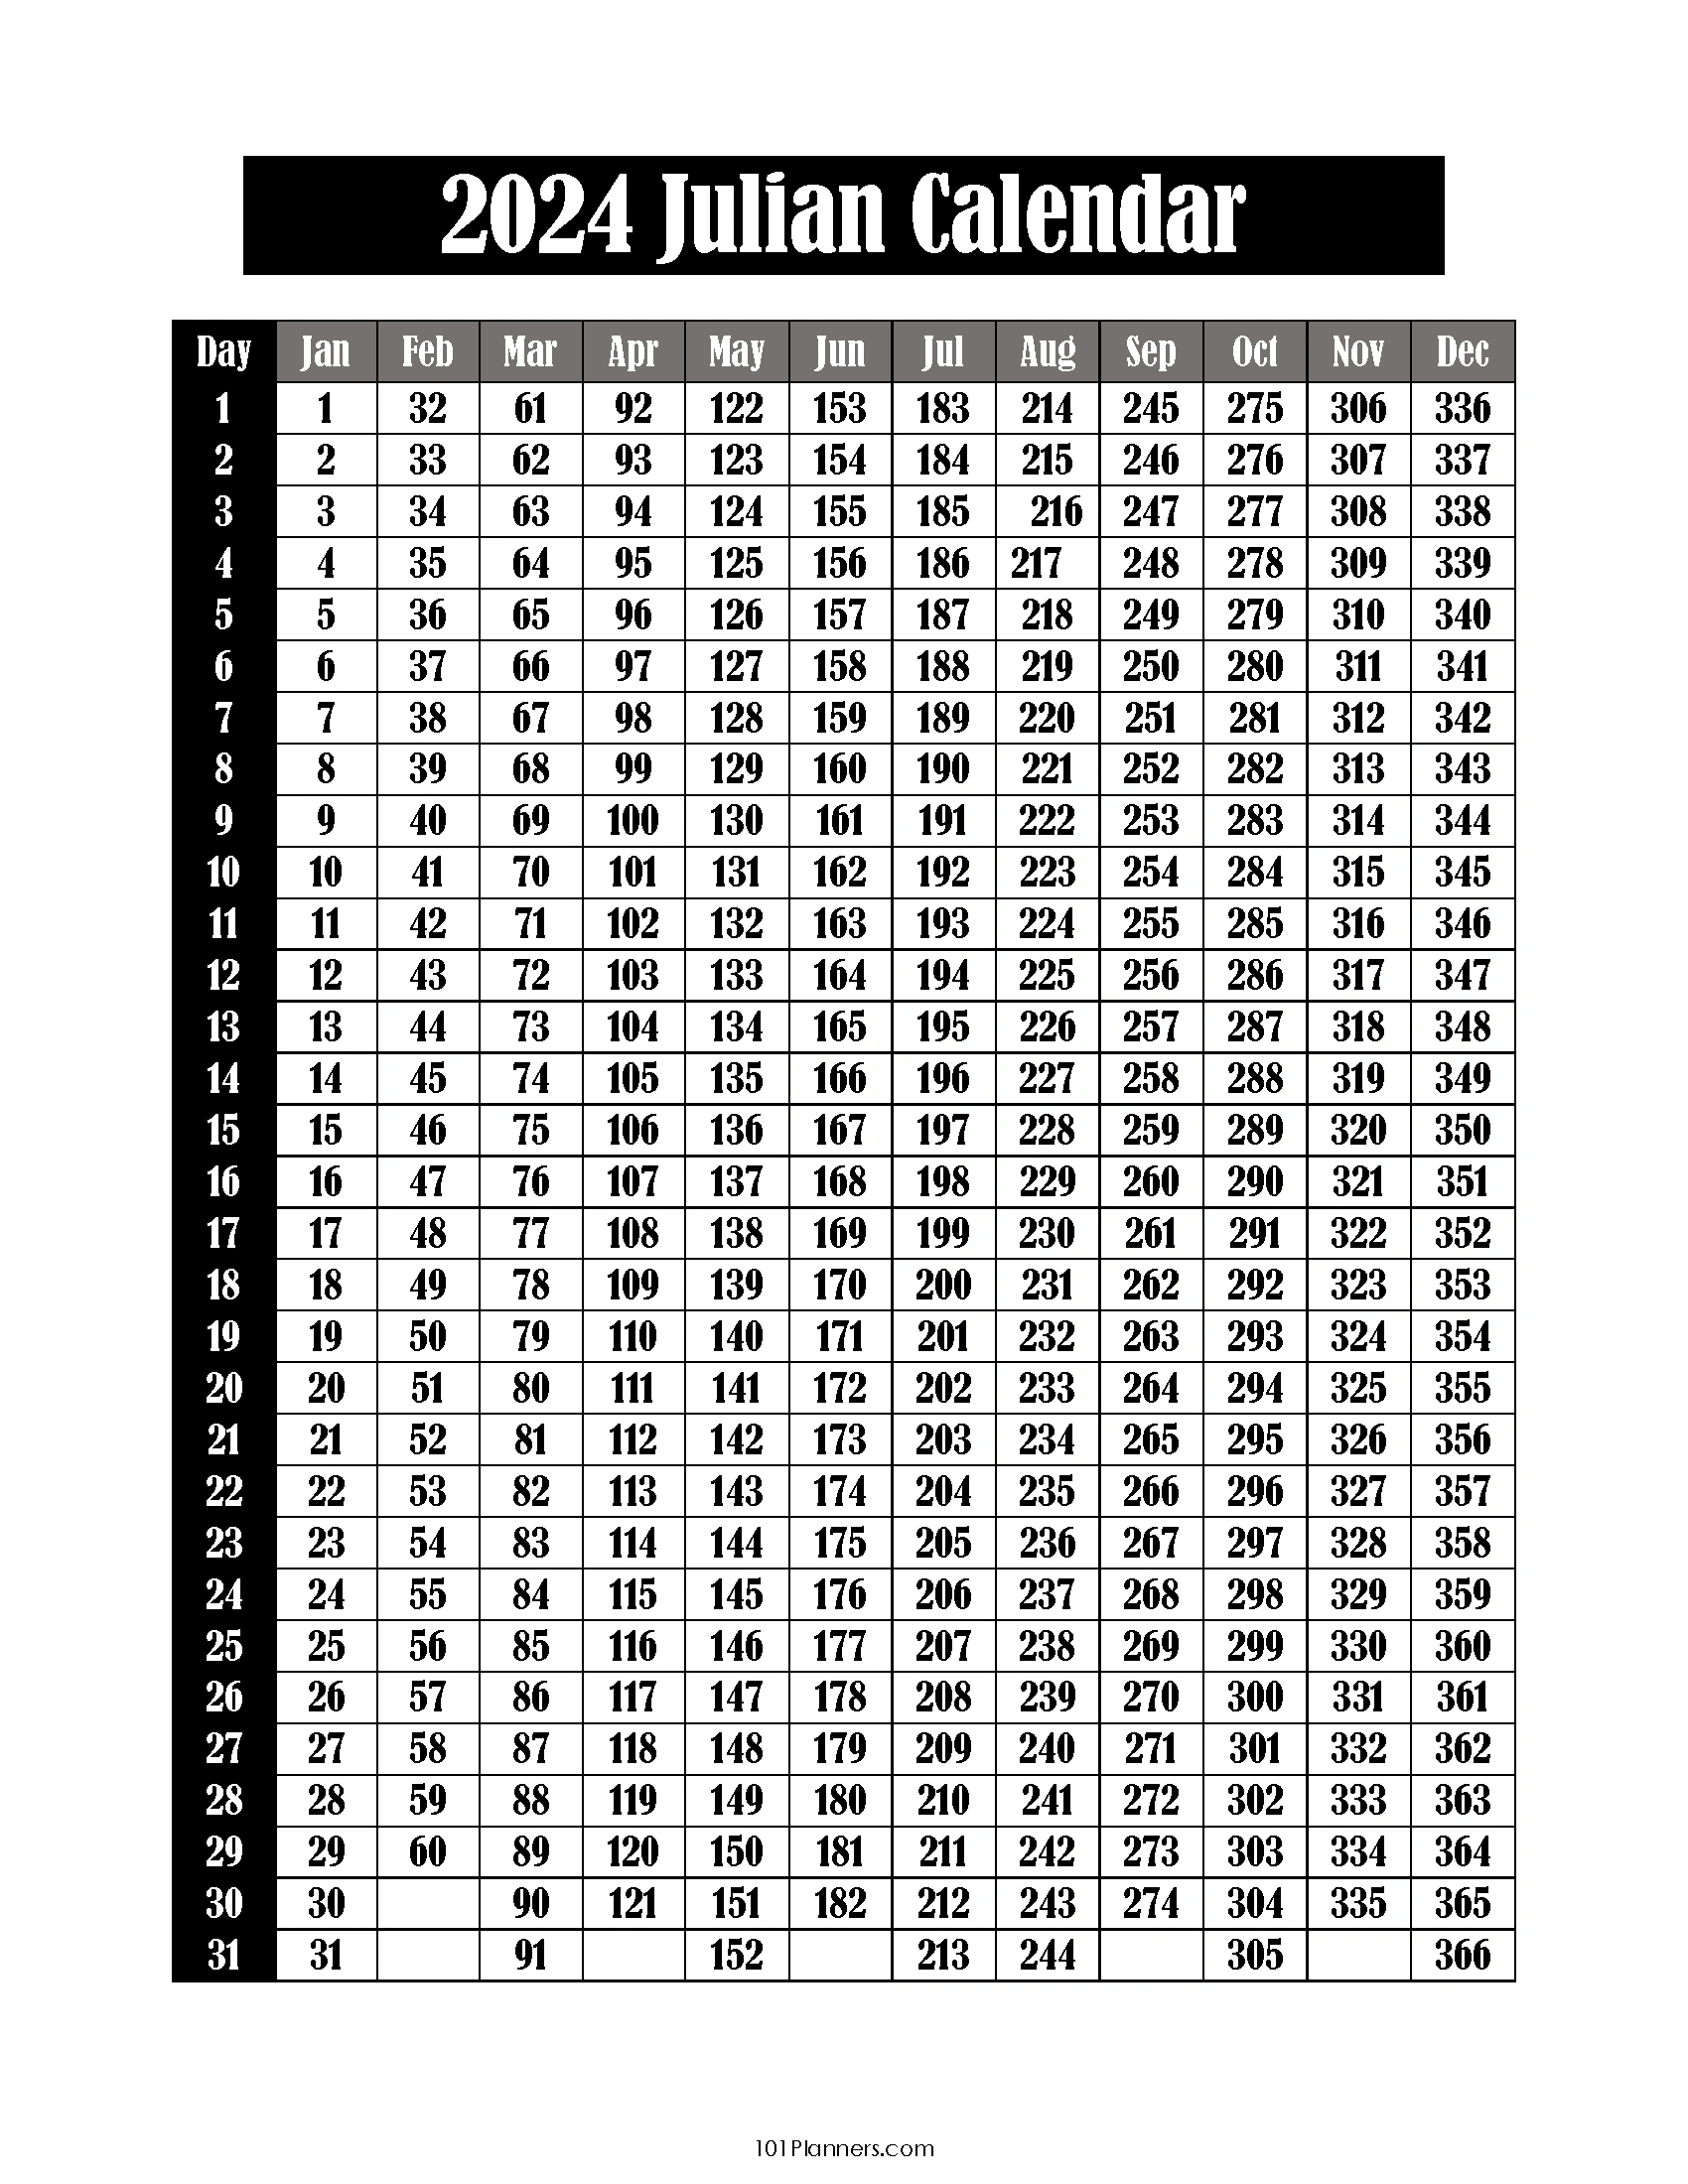 Free Printable Julian Calendar 2024-2032 | Julian Date Today inside 2024 Julian Calendar Printable Free